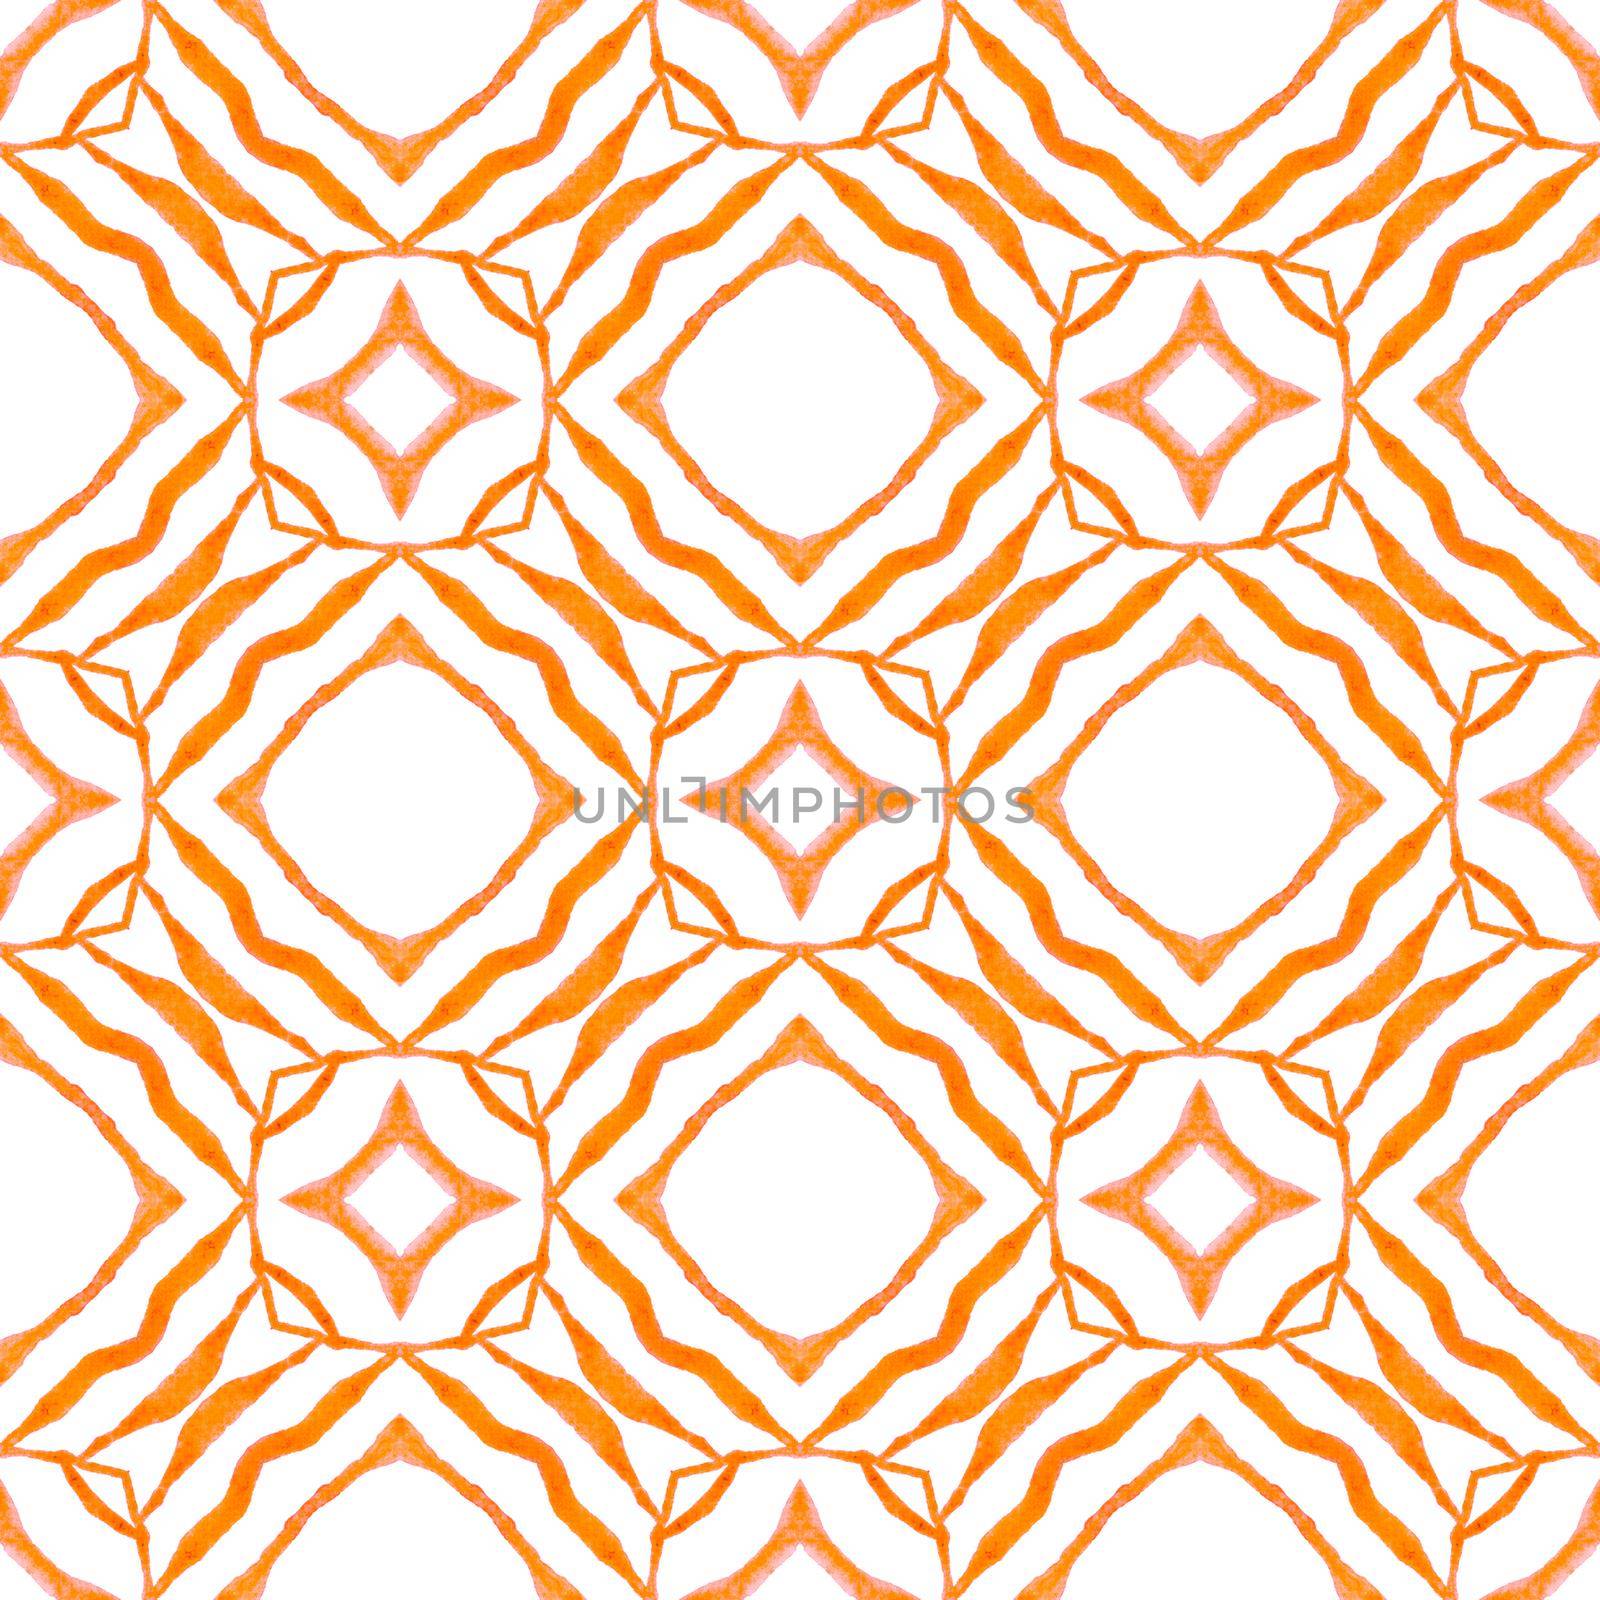 Mosaic seamless pattern. Orange awesome boho chic by beginagain